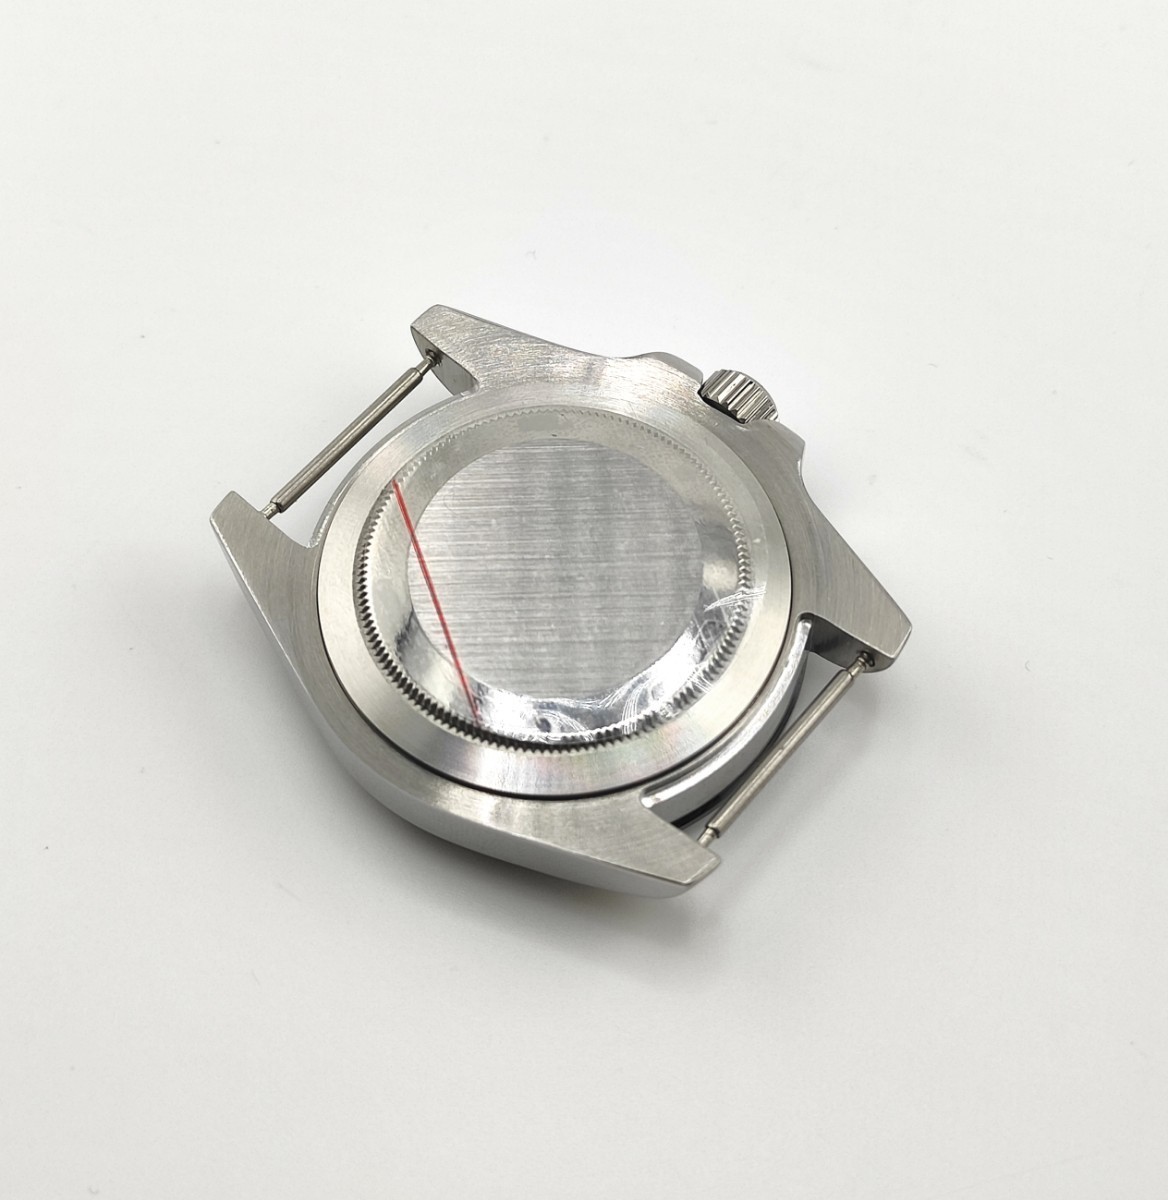  наручные часы 40mm кейс черный керамика тахеометр оправа [ соответствует Movement ]SEIKO NH35/NH36/4R35/4R36 Seiko 